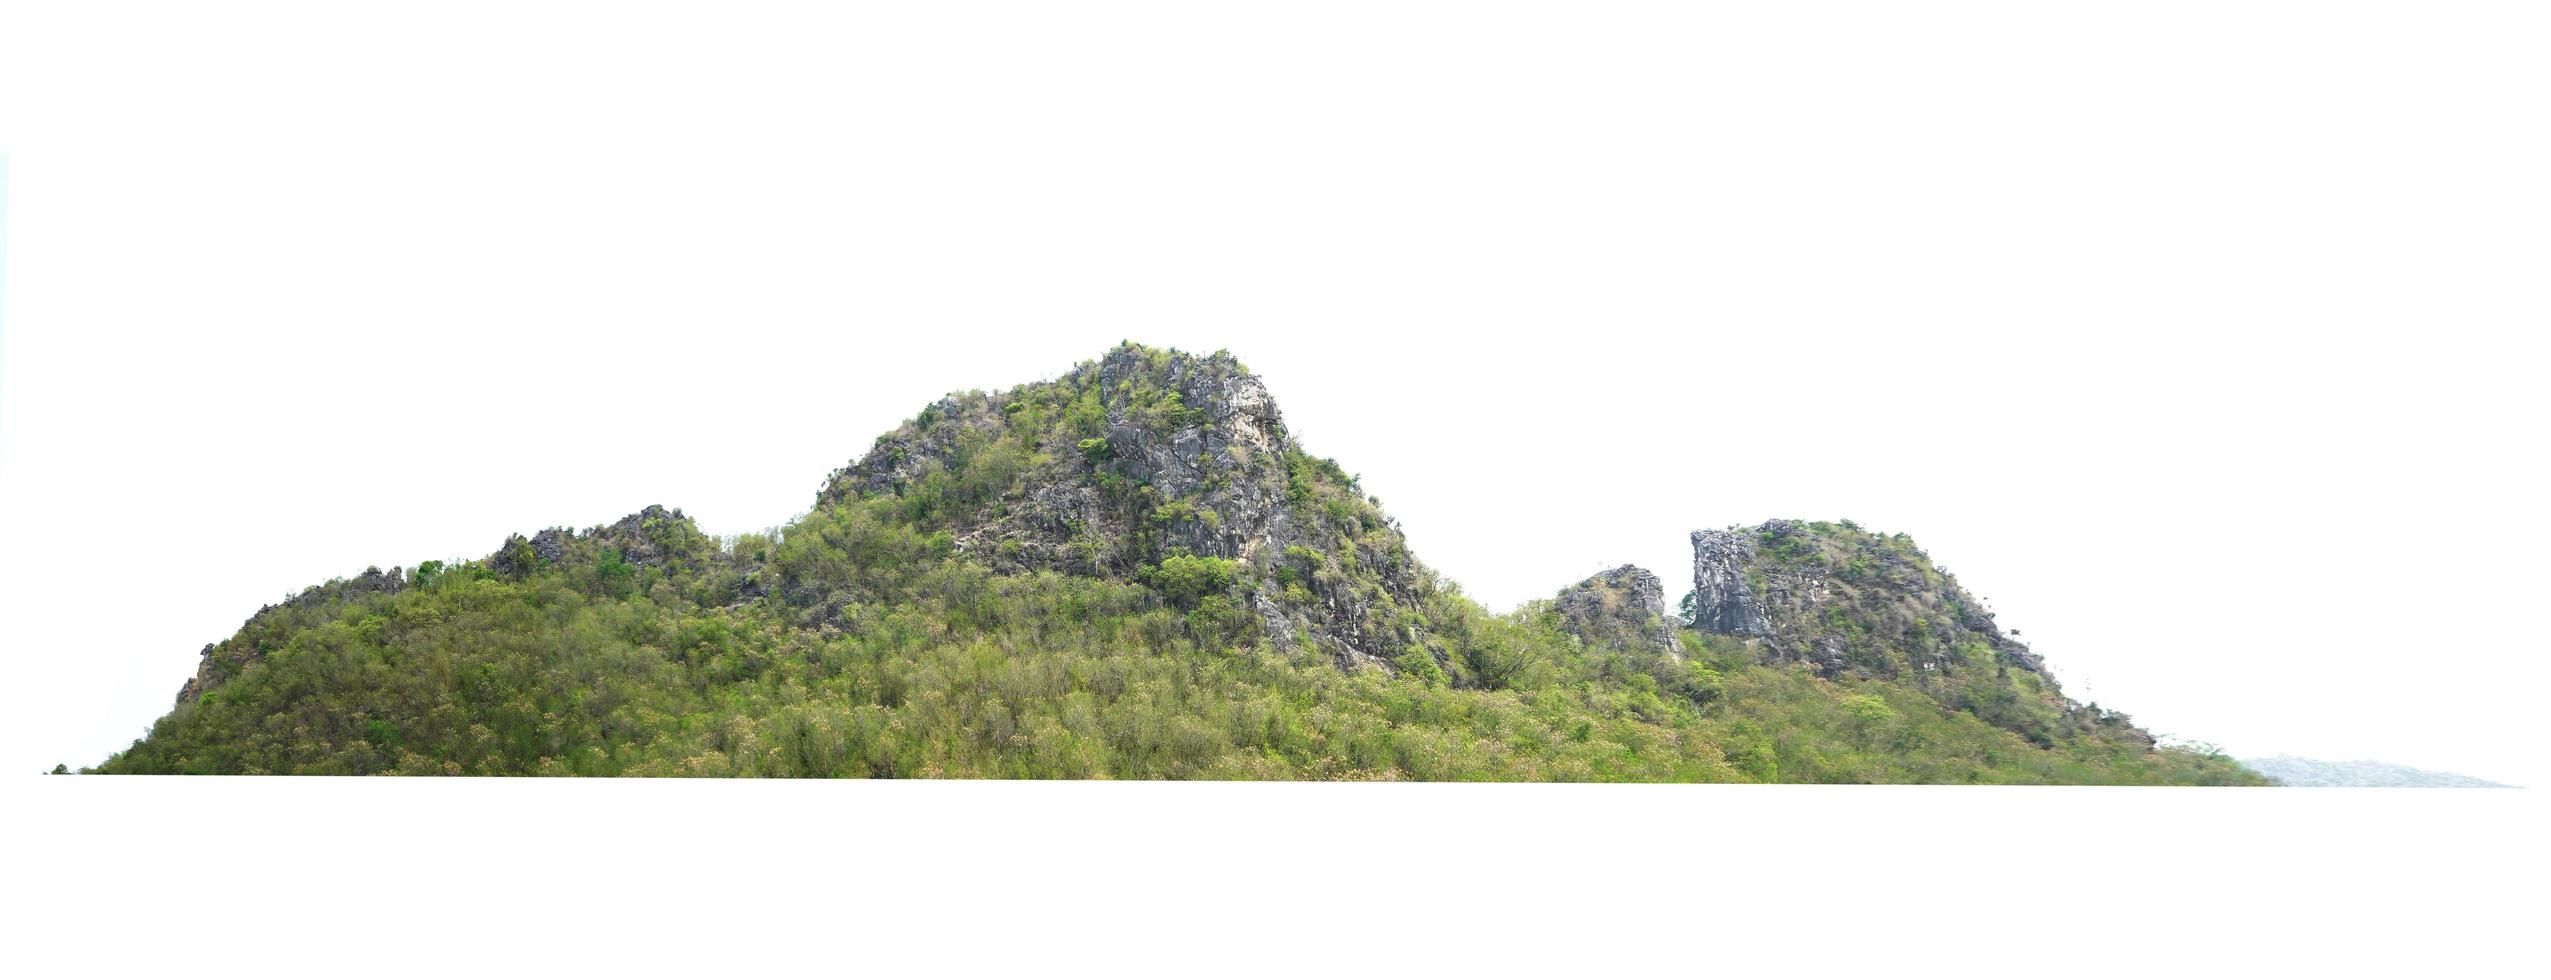 montanha de pedra isolar no fundo branco foto